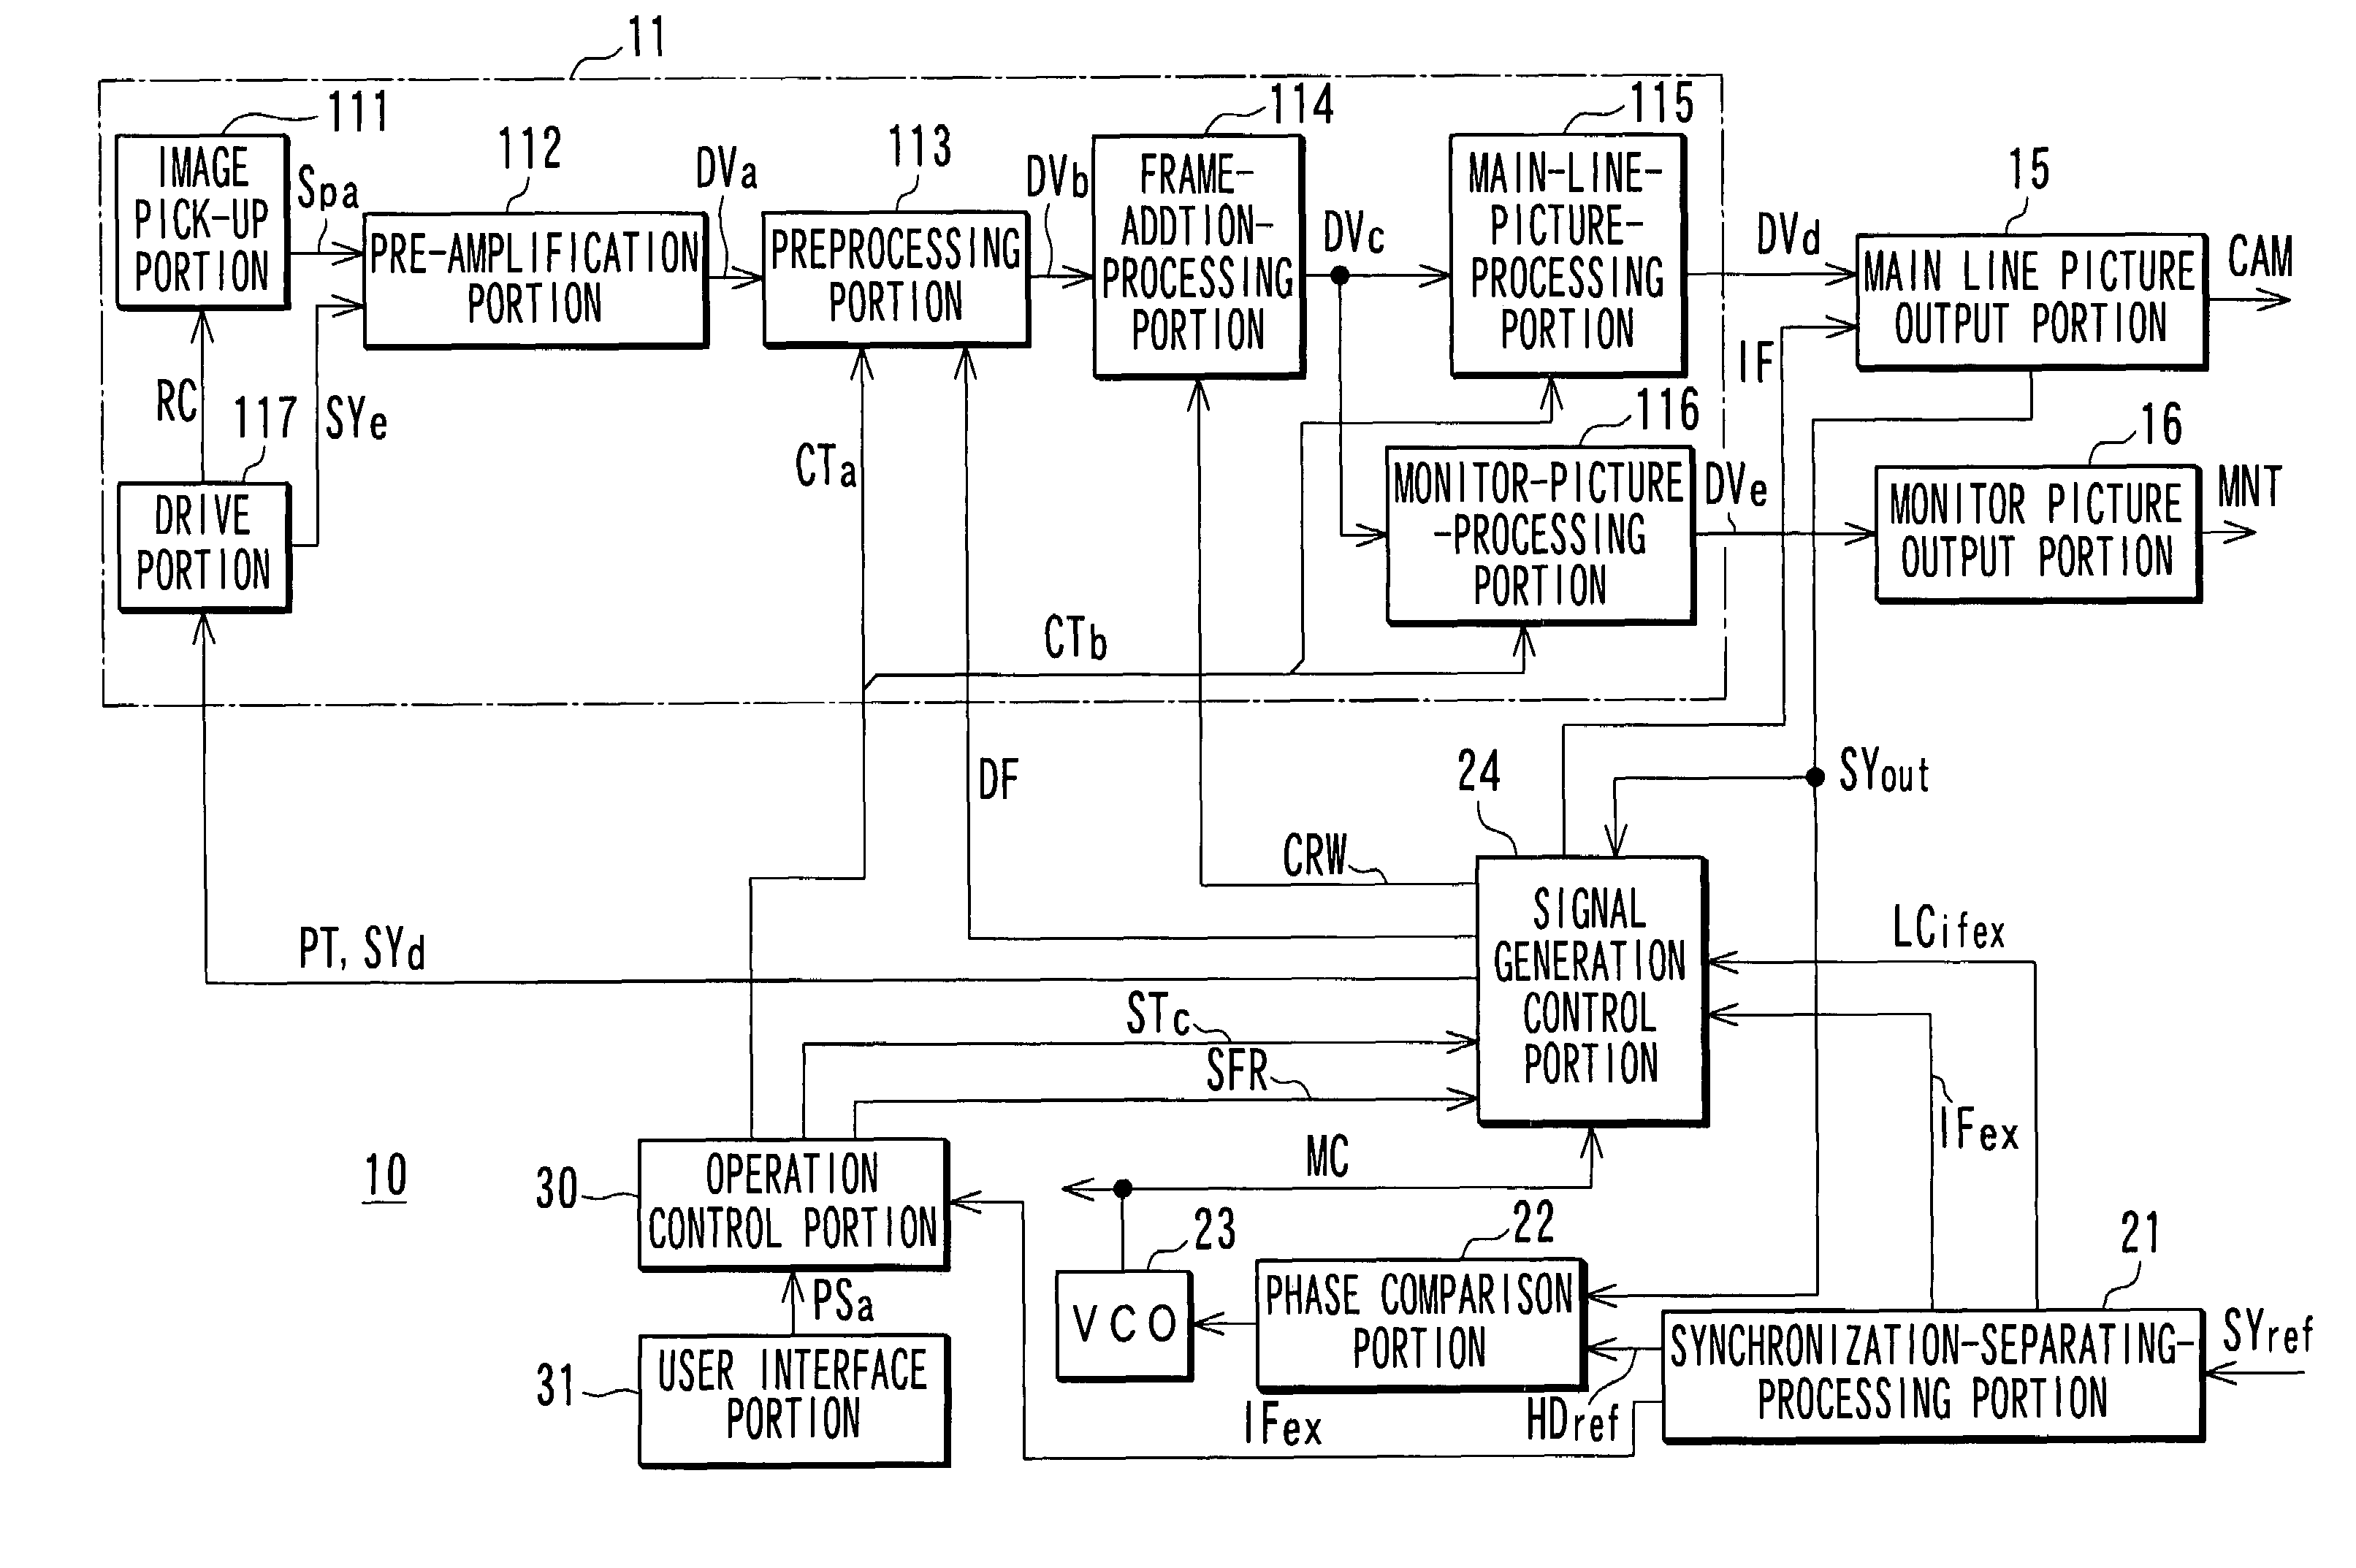 Image pickup apparatus and synchronization signal generating apparatus